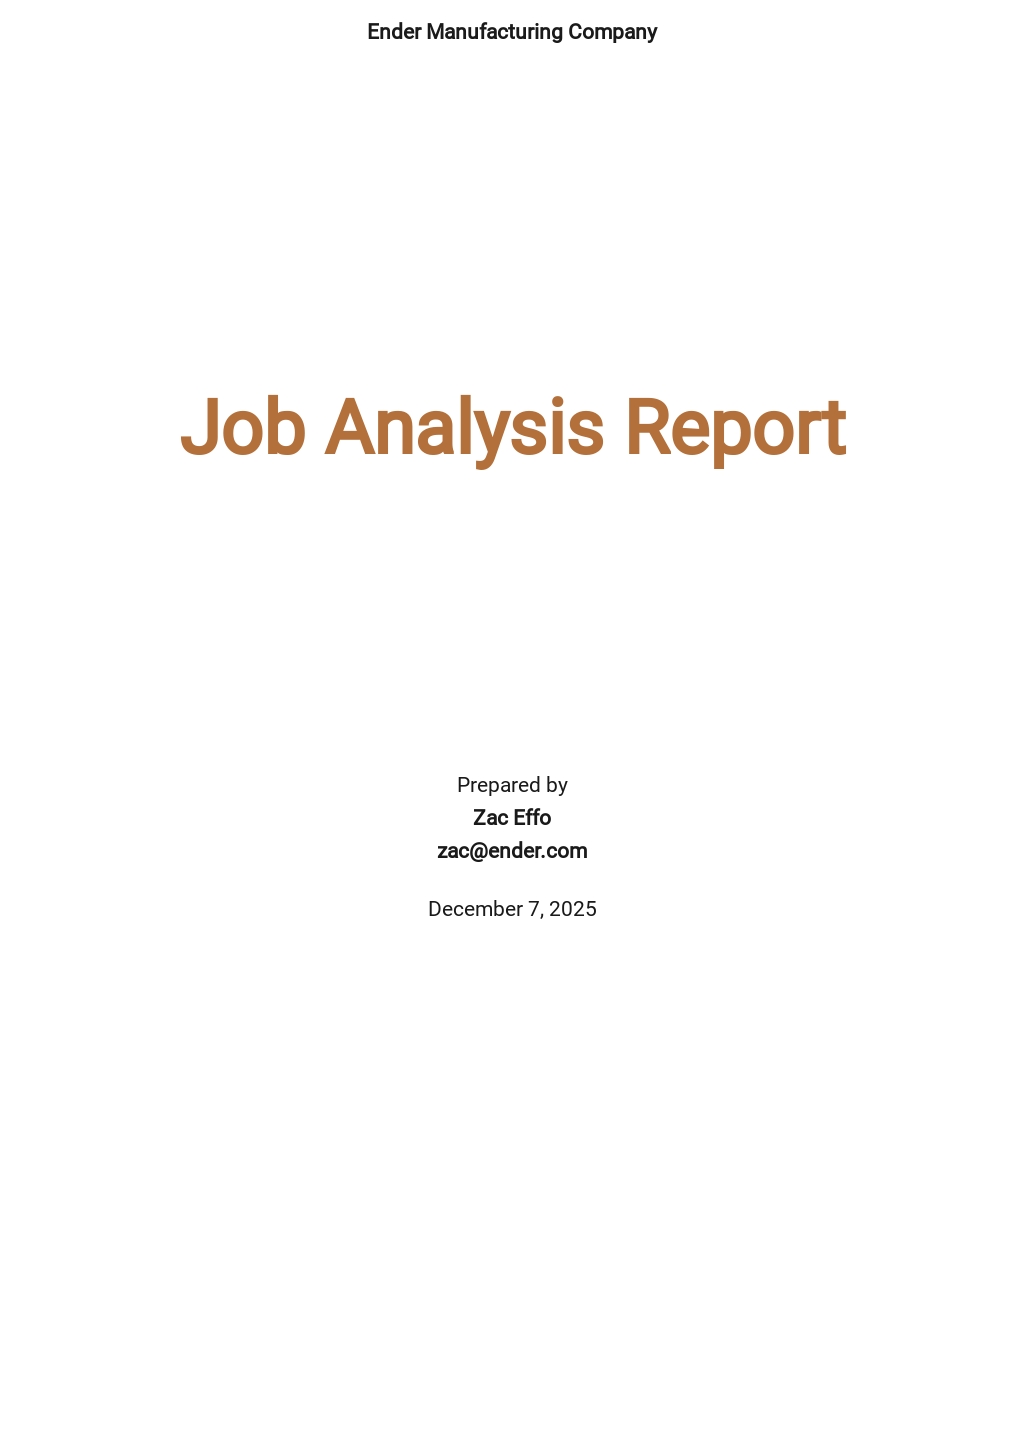 Job Analysis Report Template.jpe